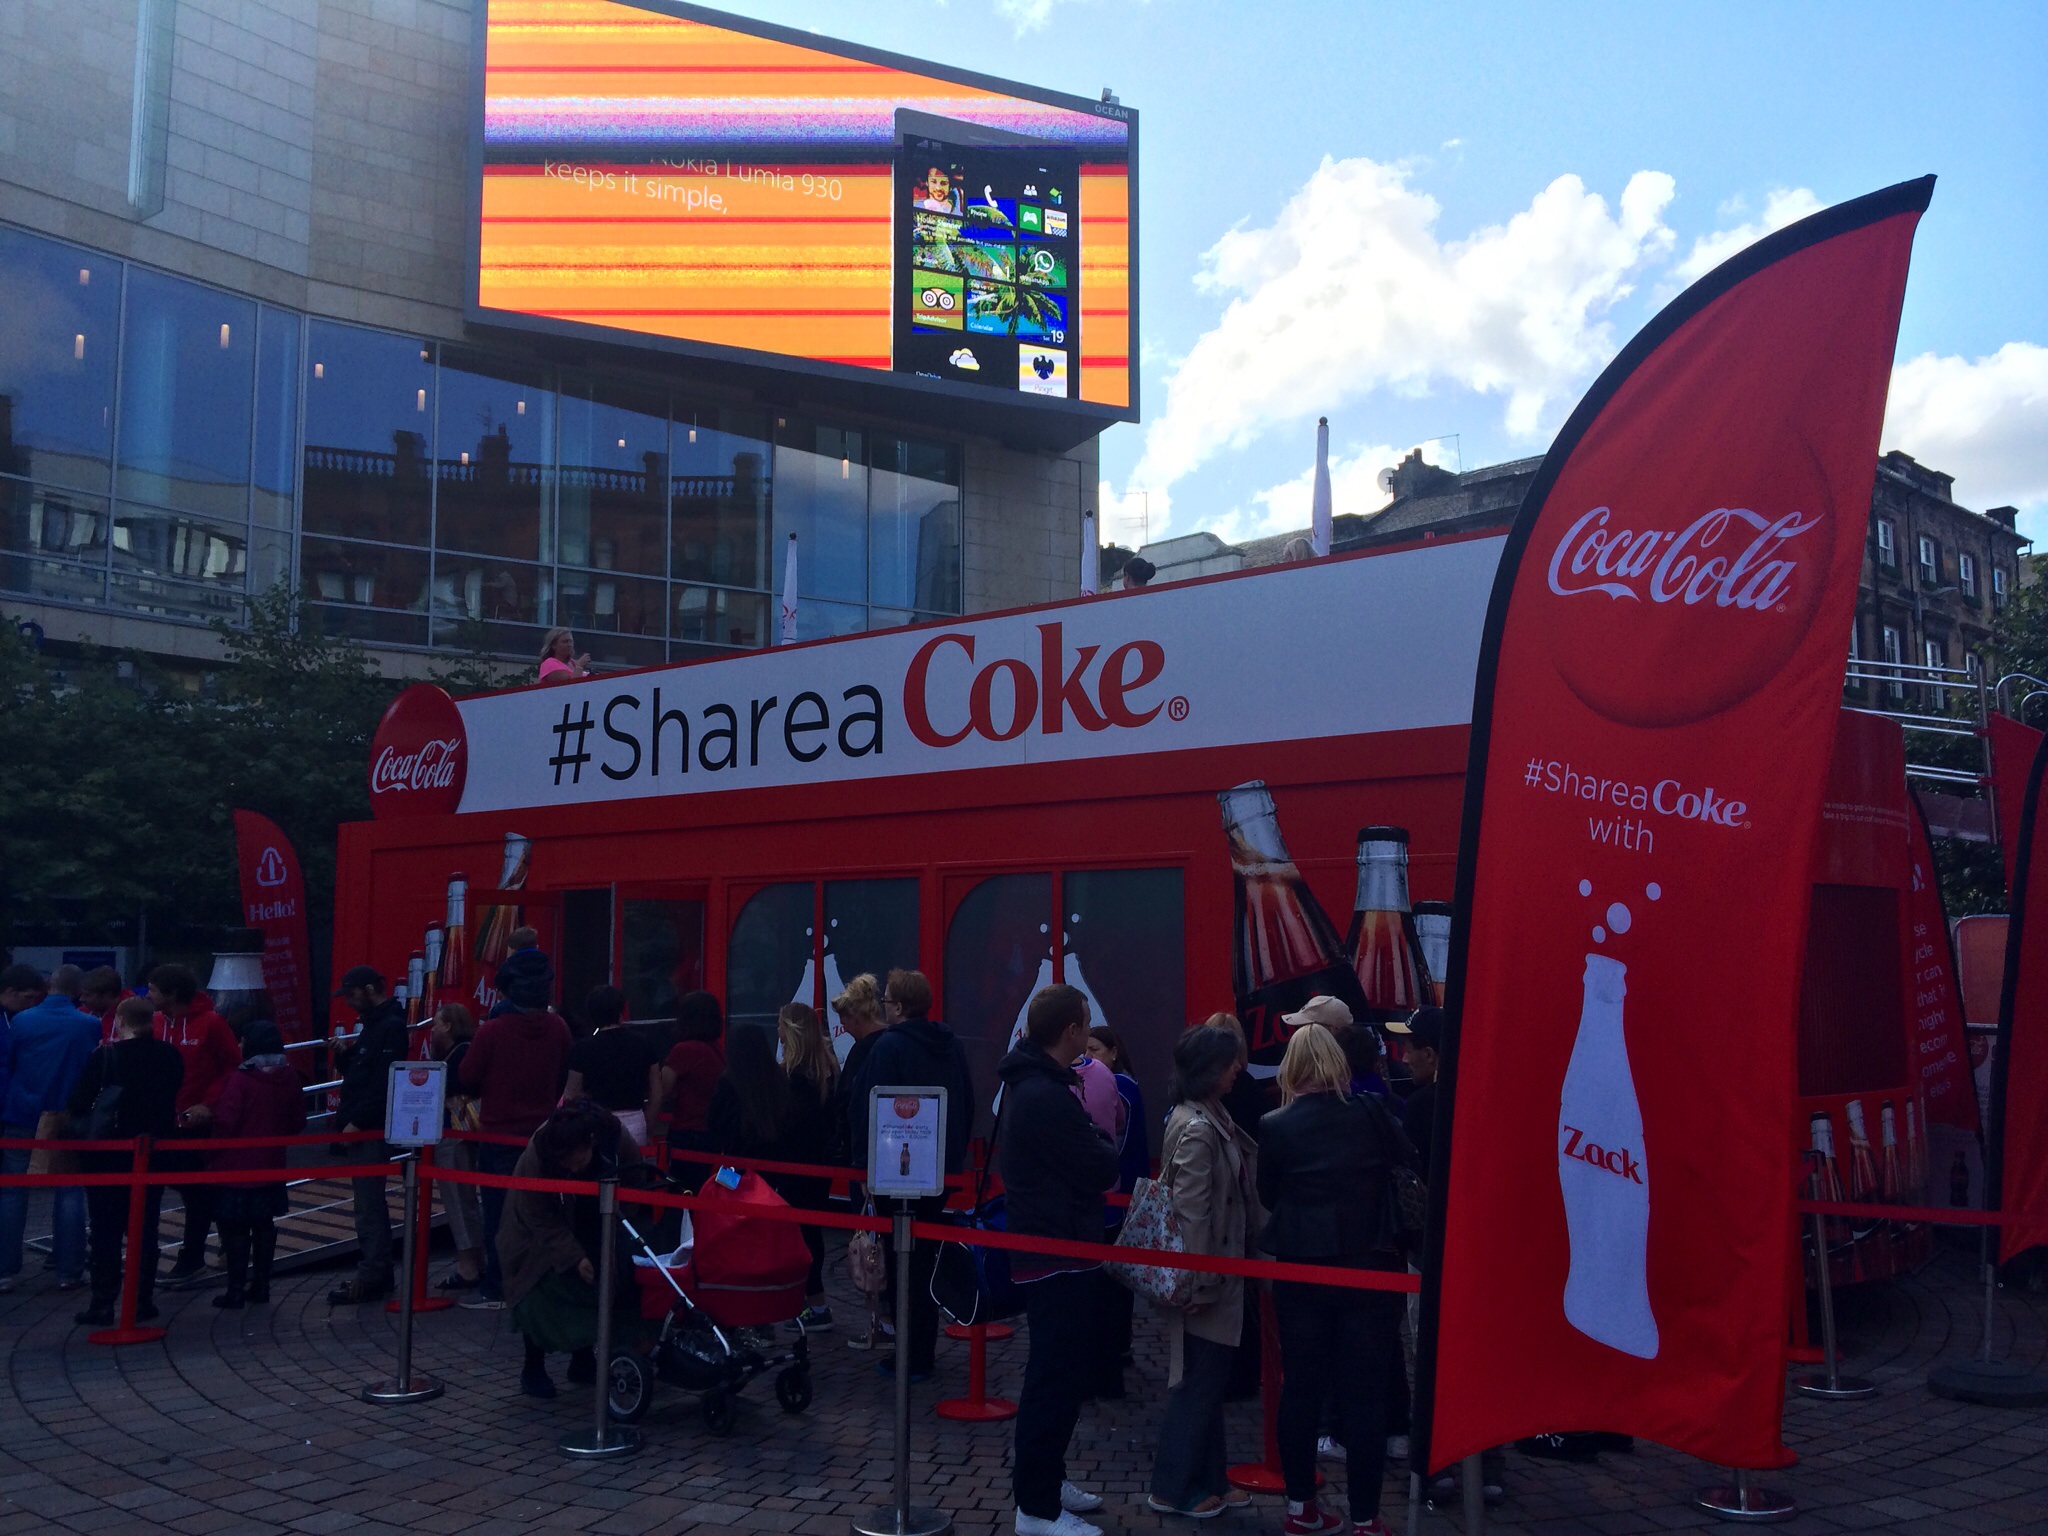 Share a coke event